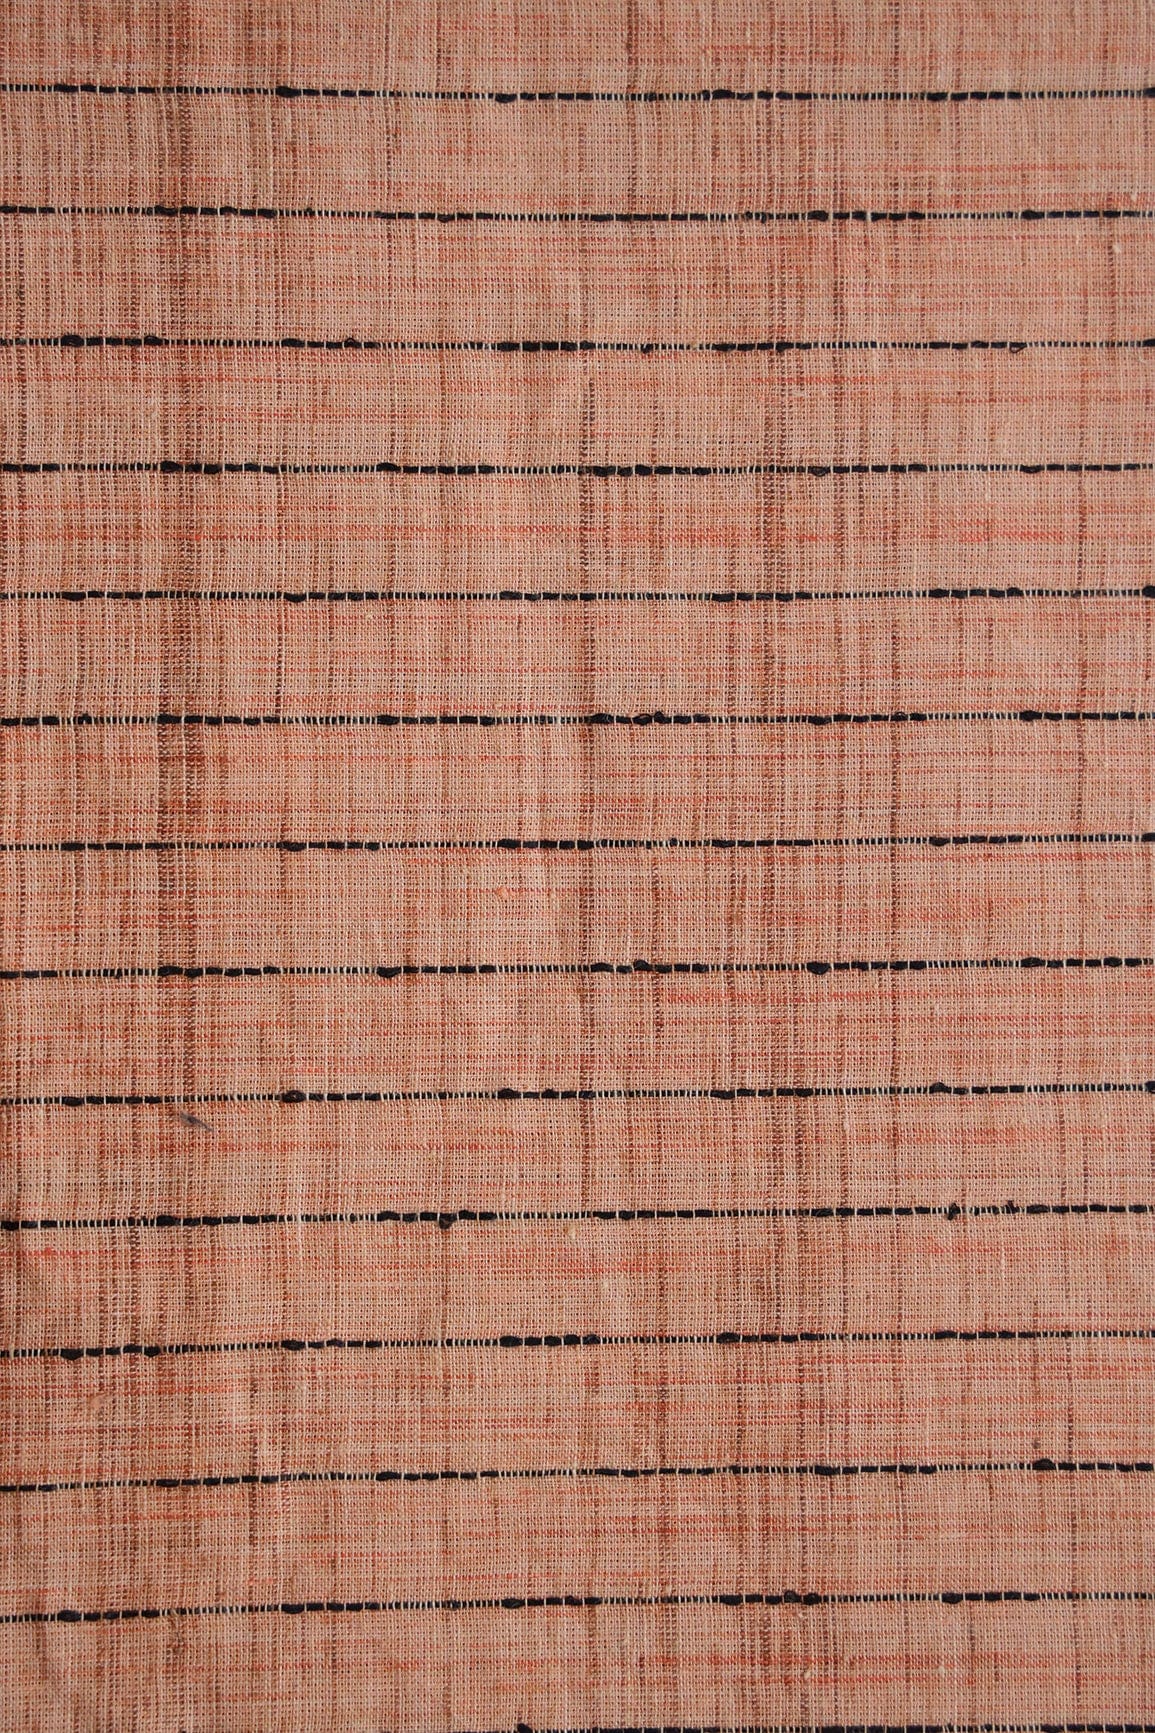 doeraa Hand Woven Peach Stripes Textured Handwoven Organic Cotton Fabric